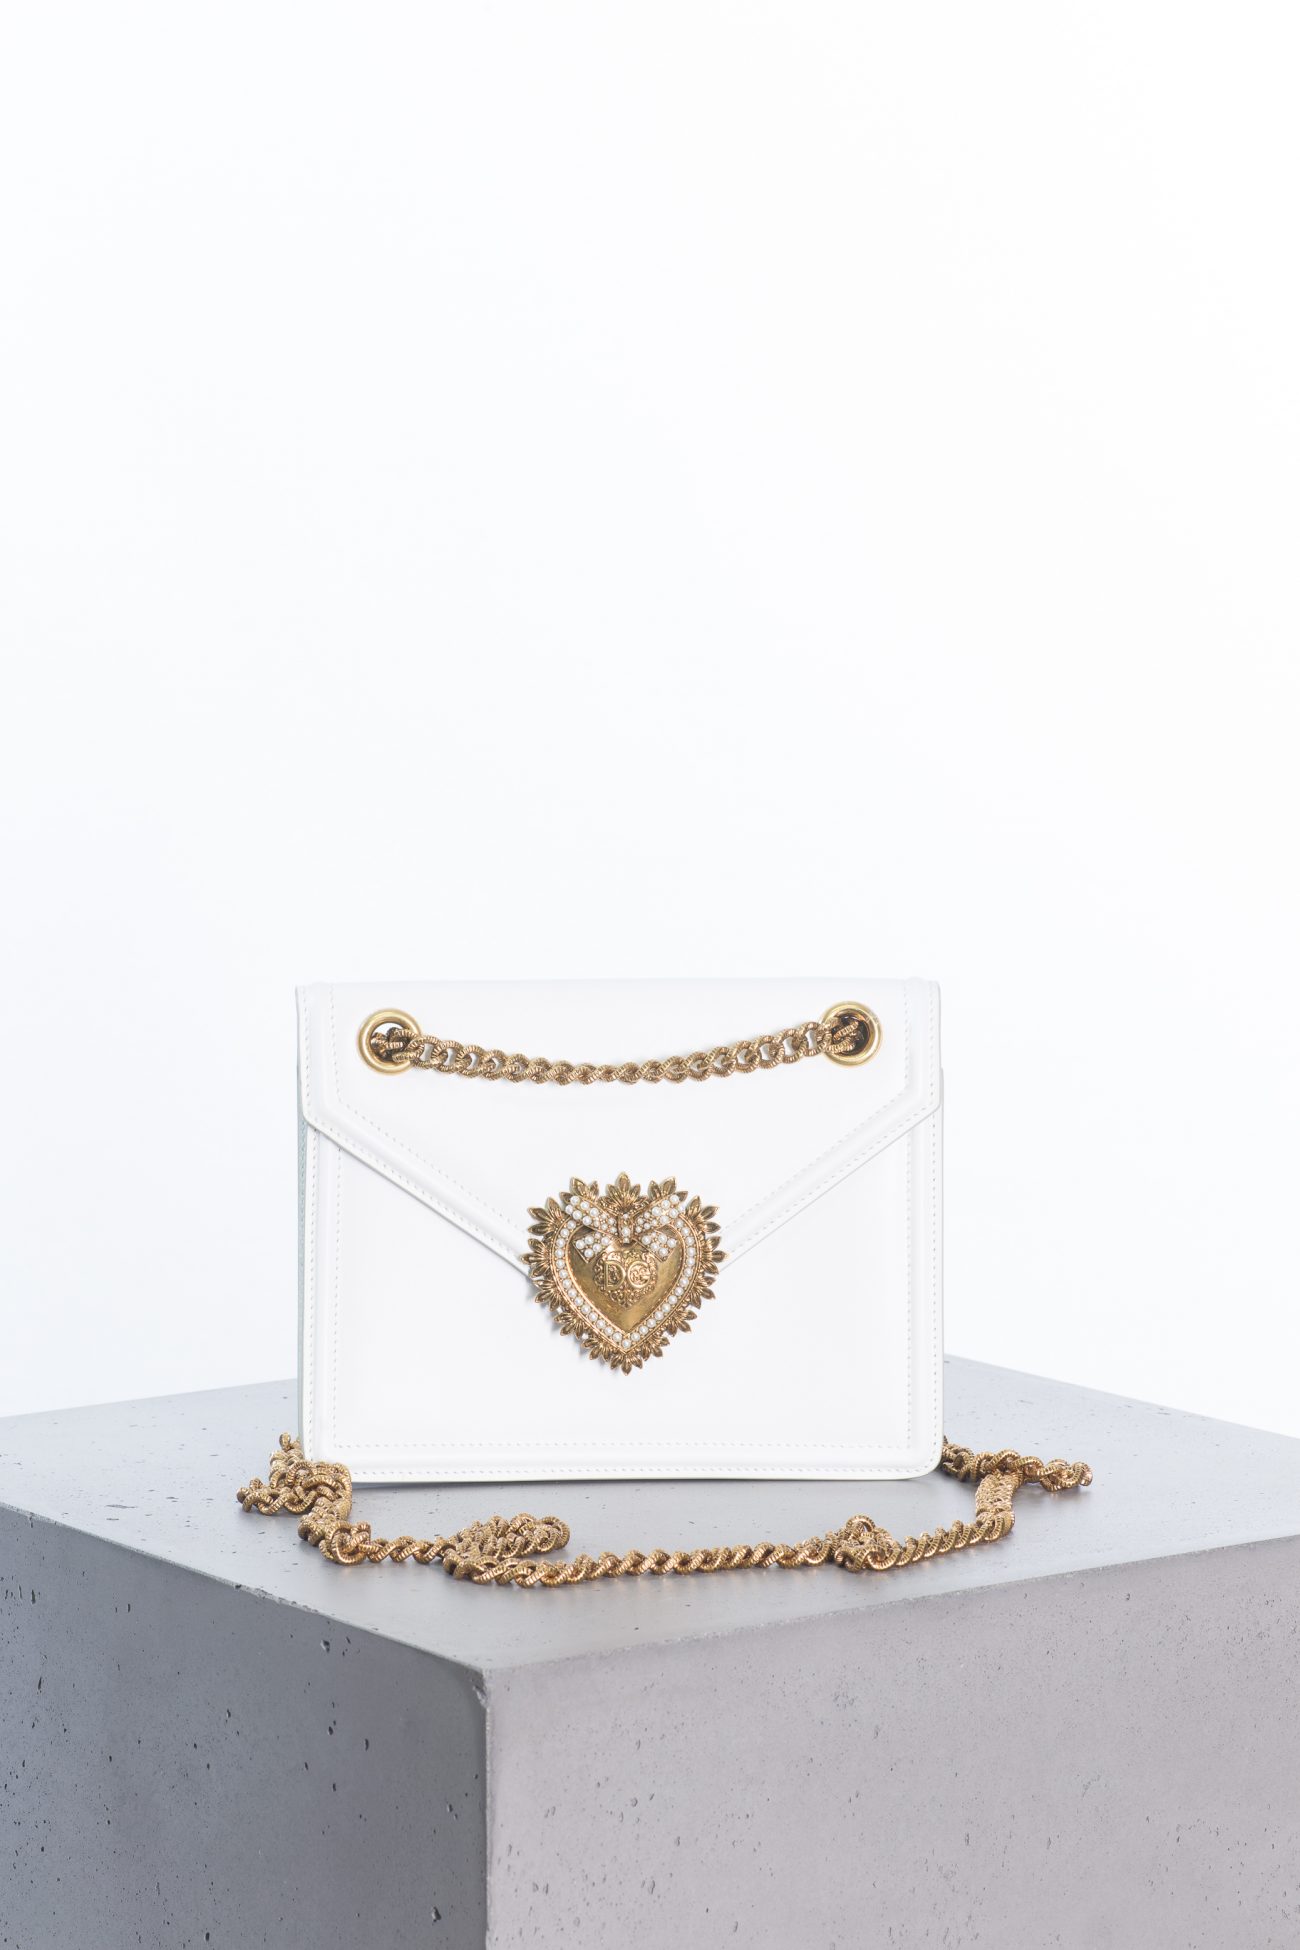 Dolce Gabbana Devotion crossbody bag